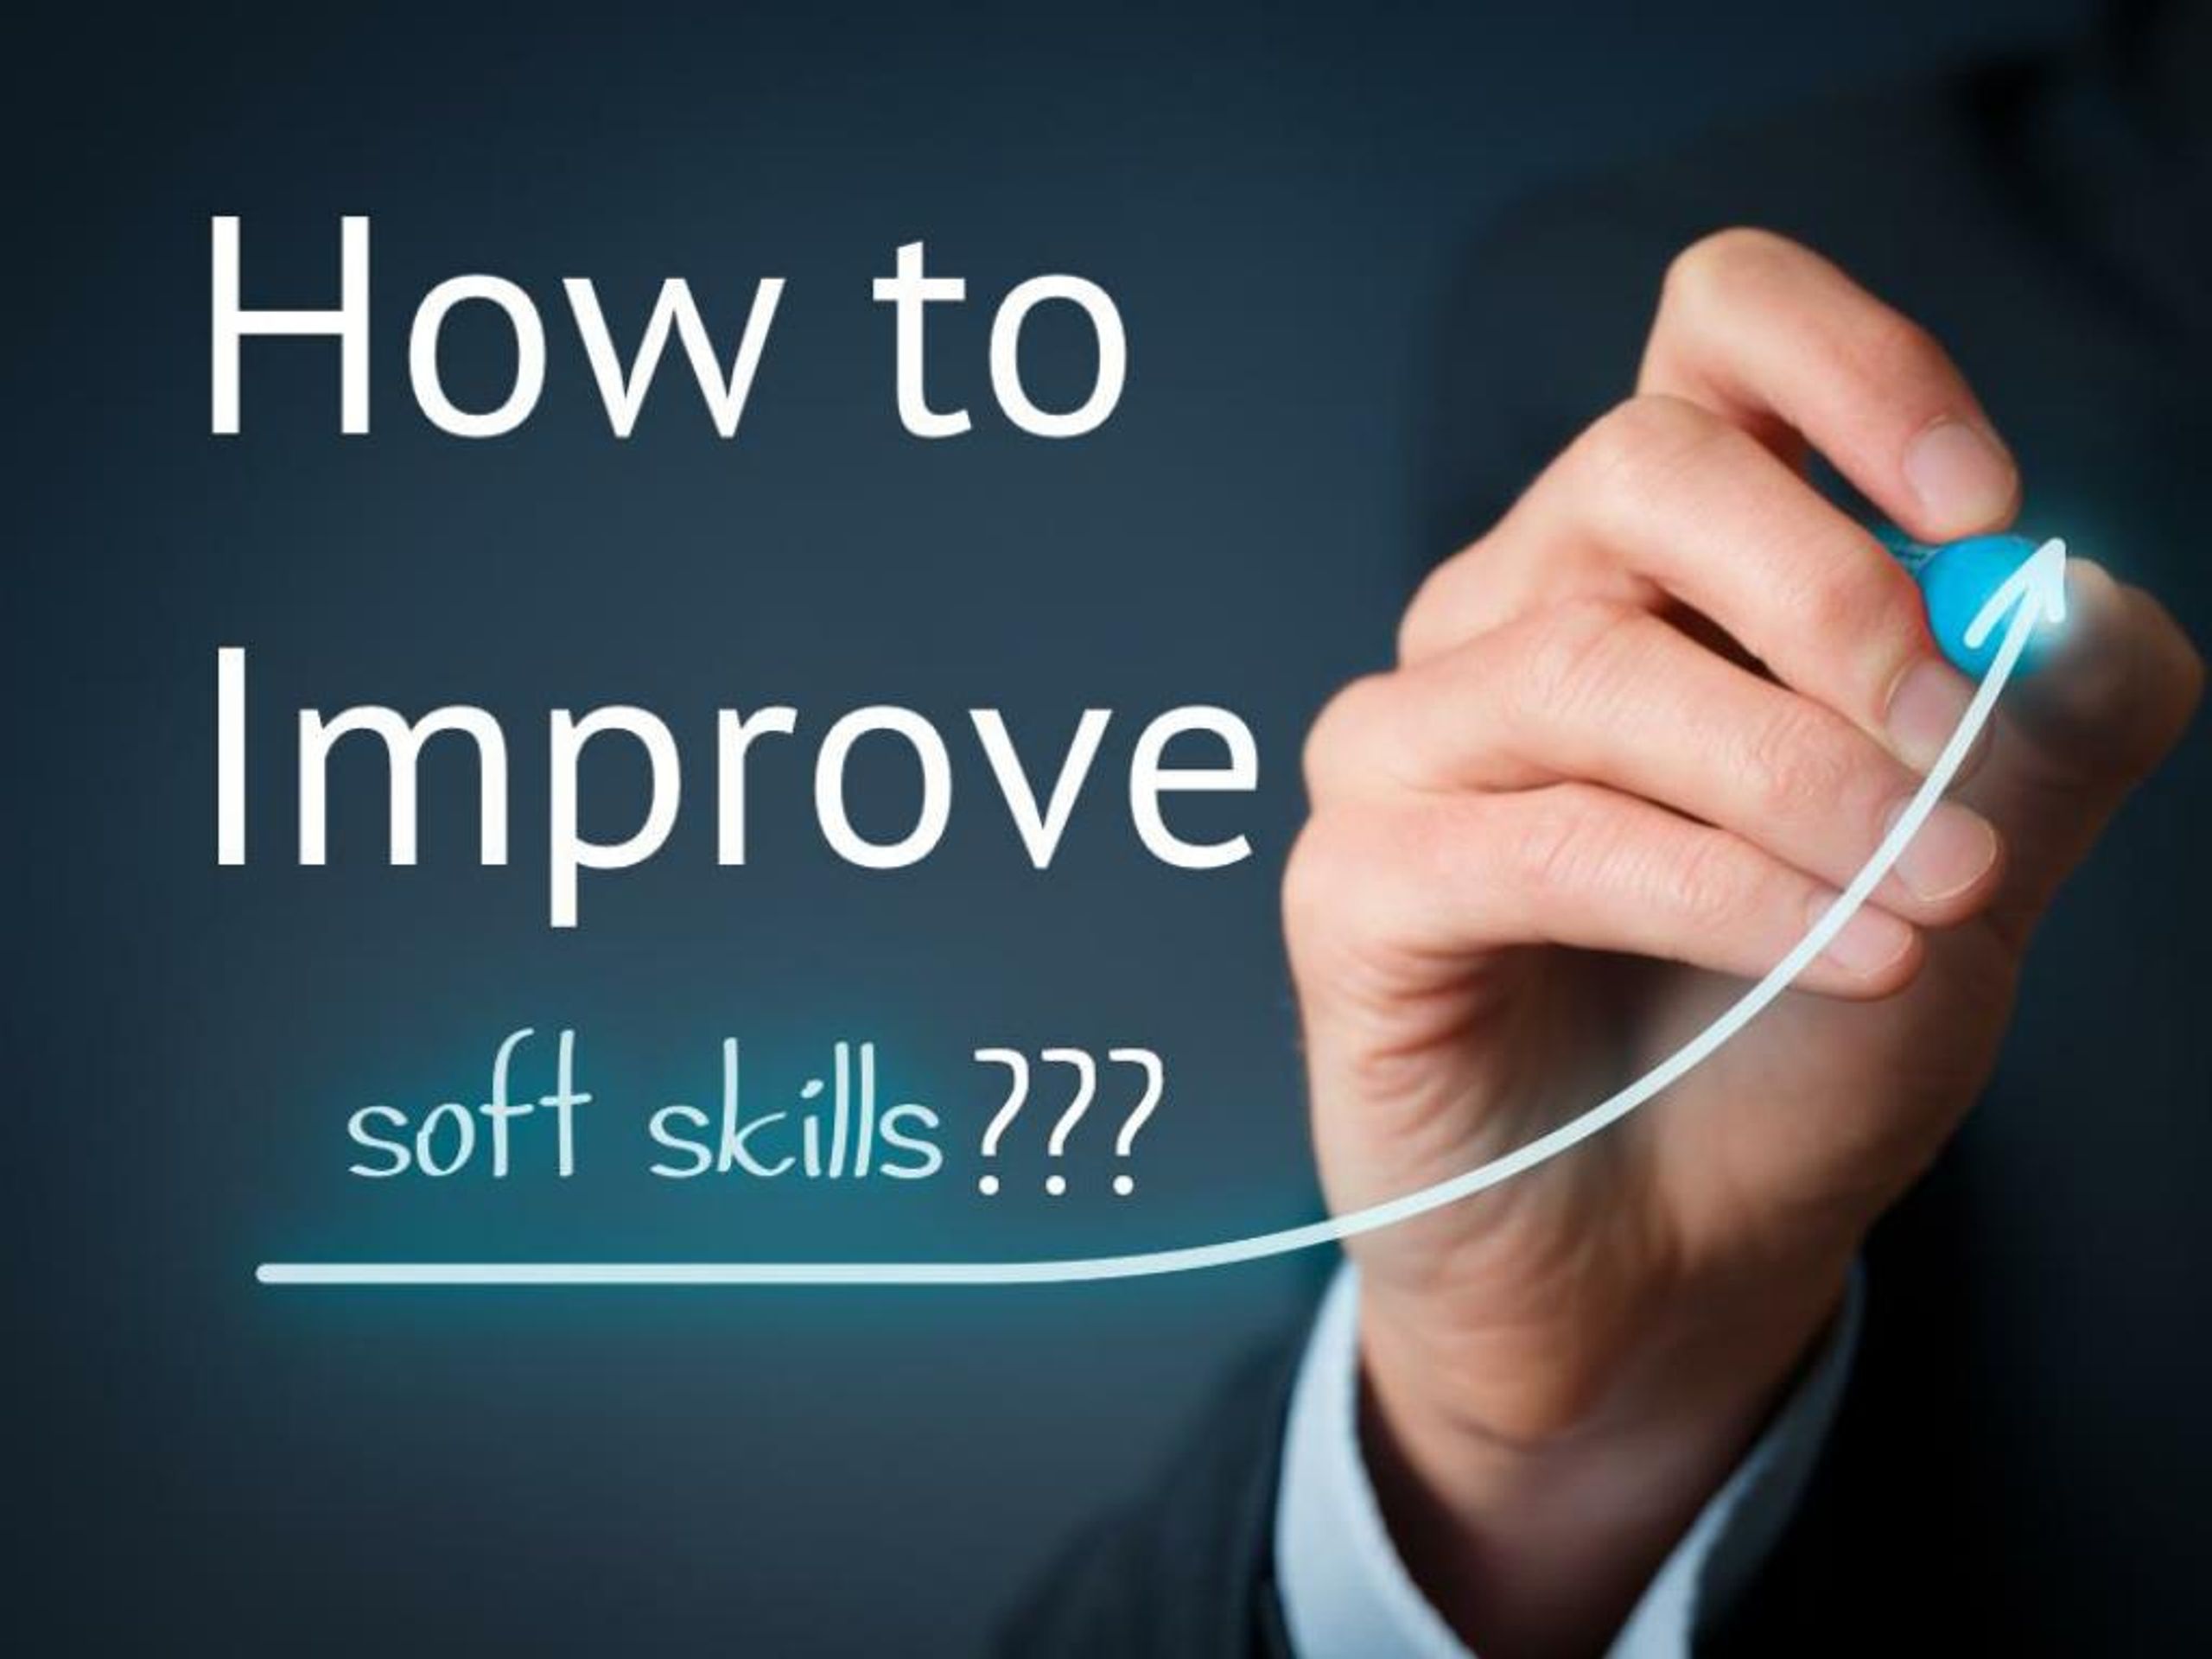 soft skills presentation powerpoint